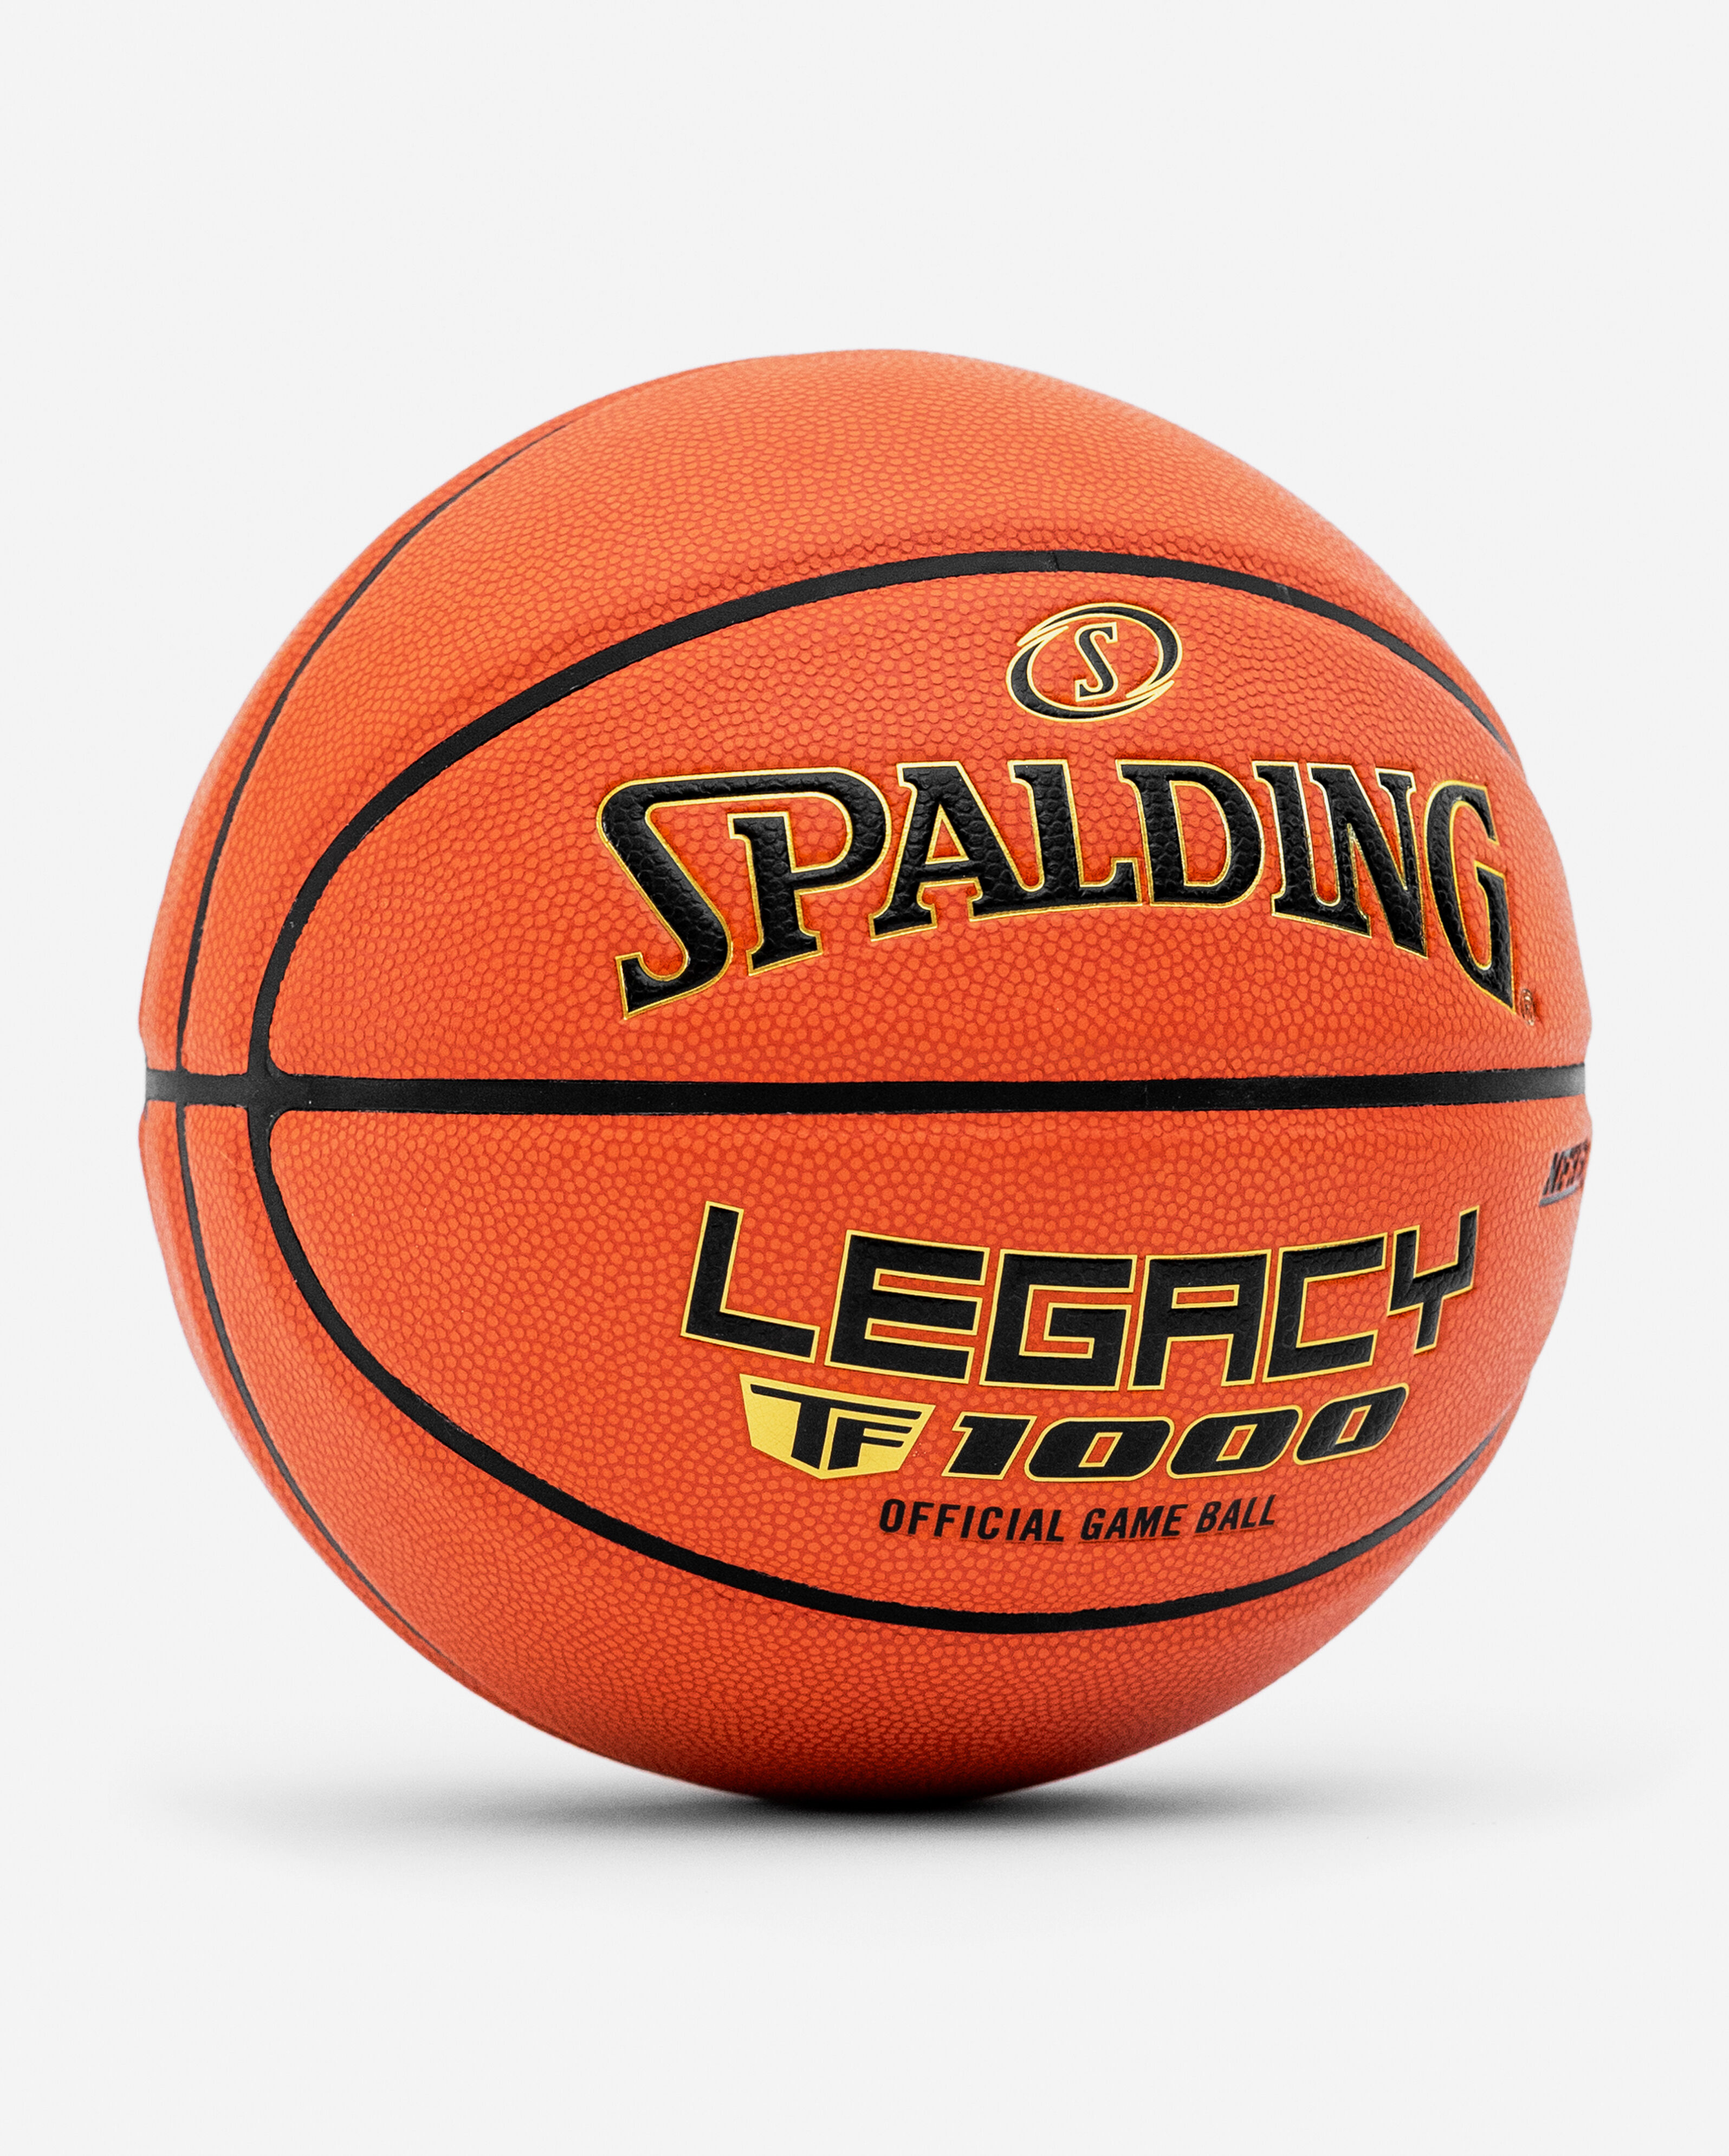 Spalding tf1000 Legacy Basket Ball 